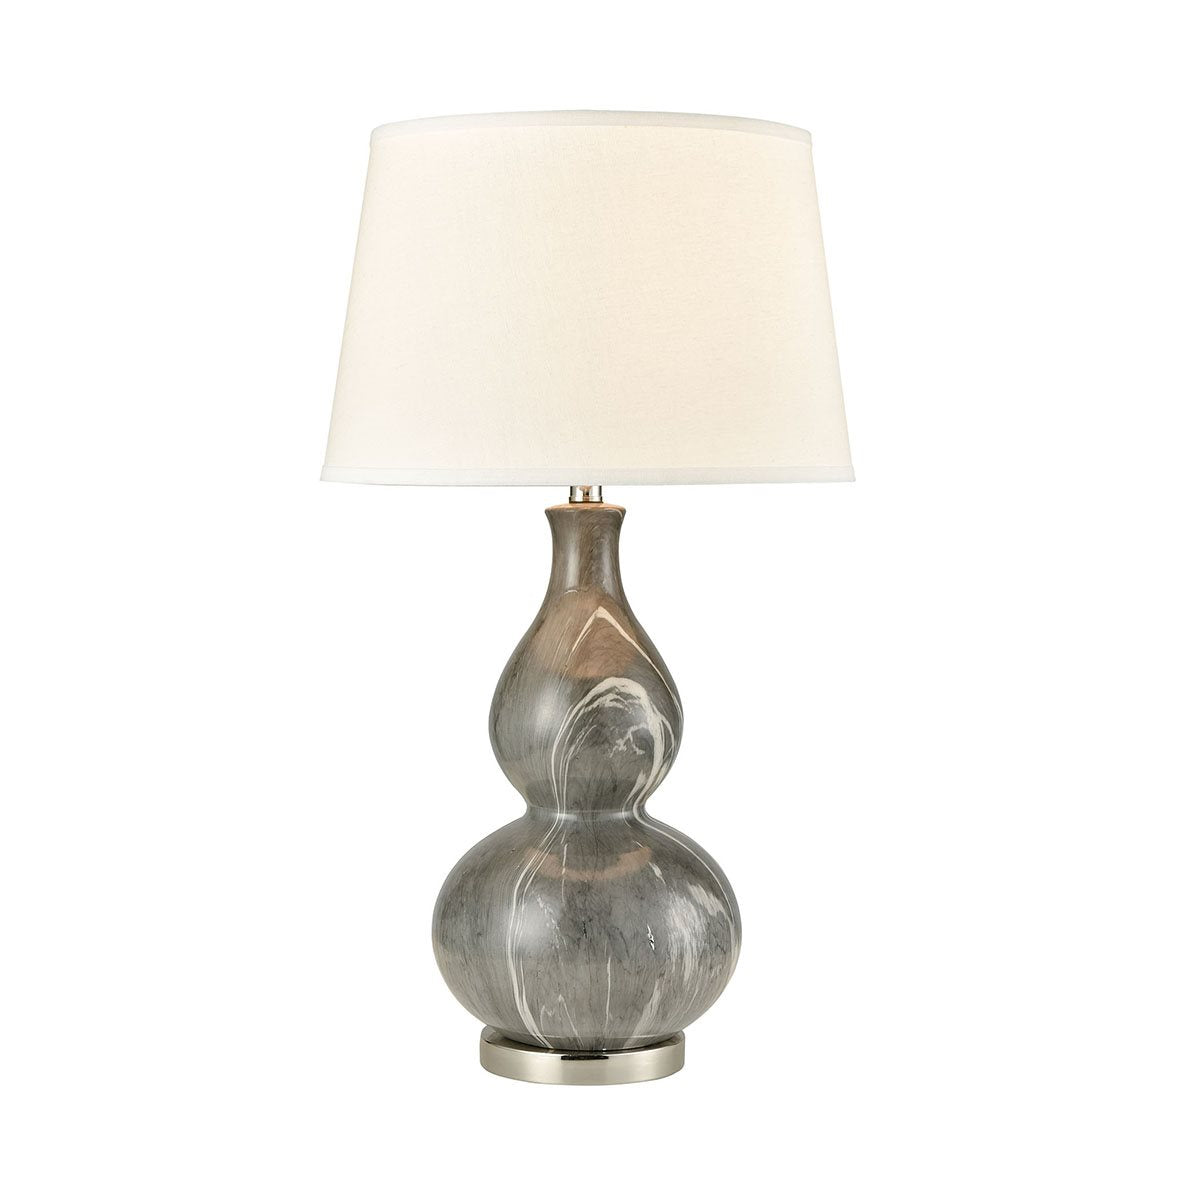 Stein World Laguria Table Lamp 77158